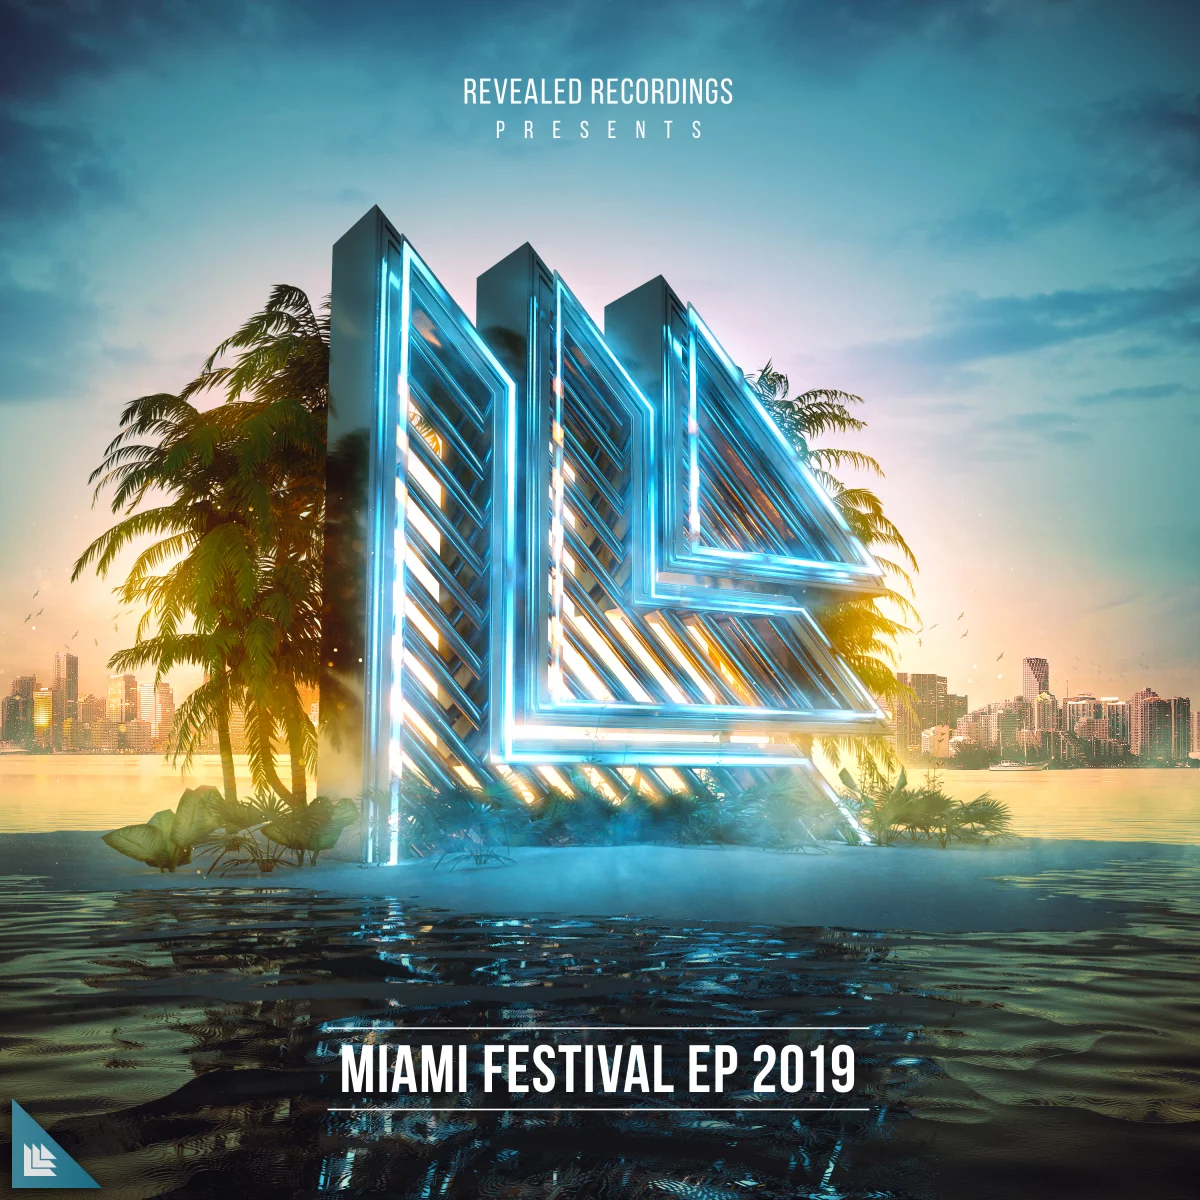 Miami Festival EP 2019 - Revealed Recordings